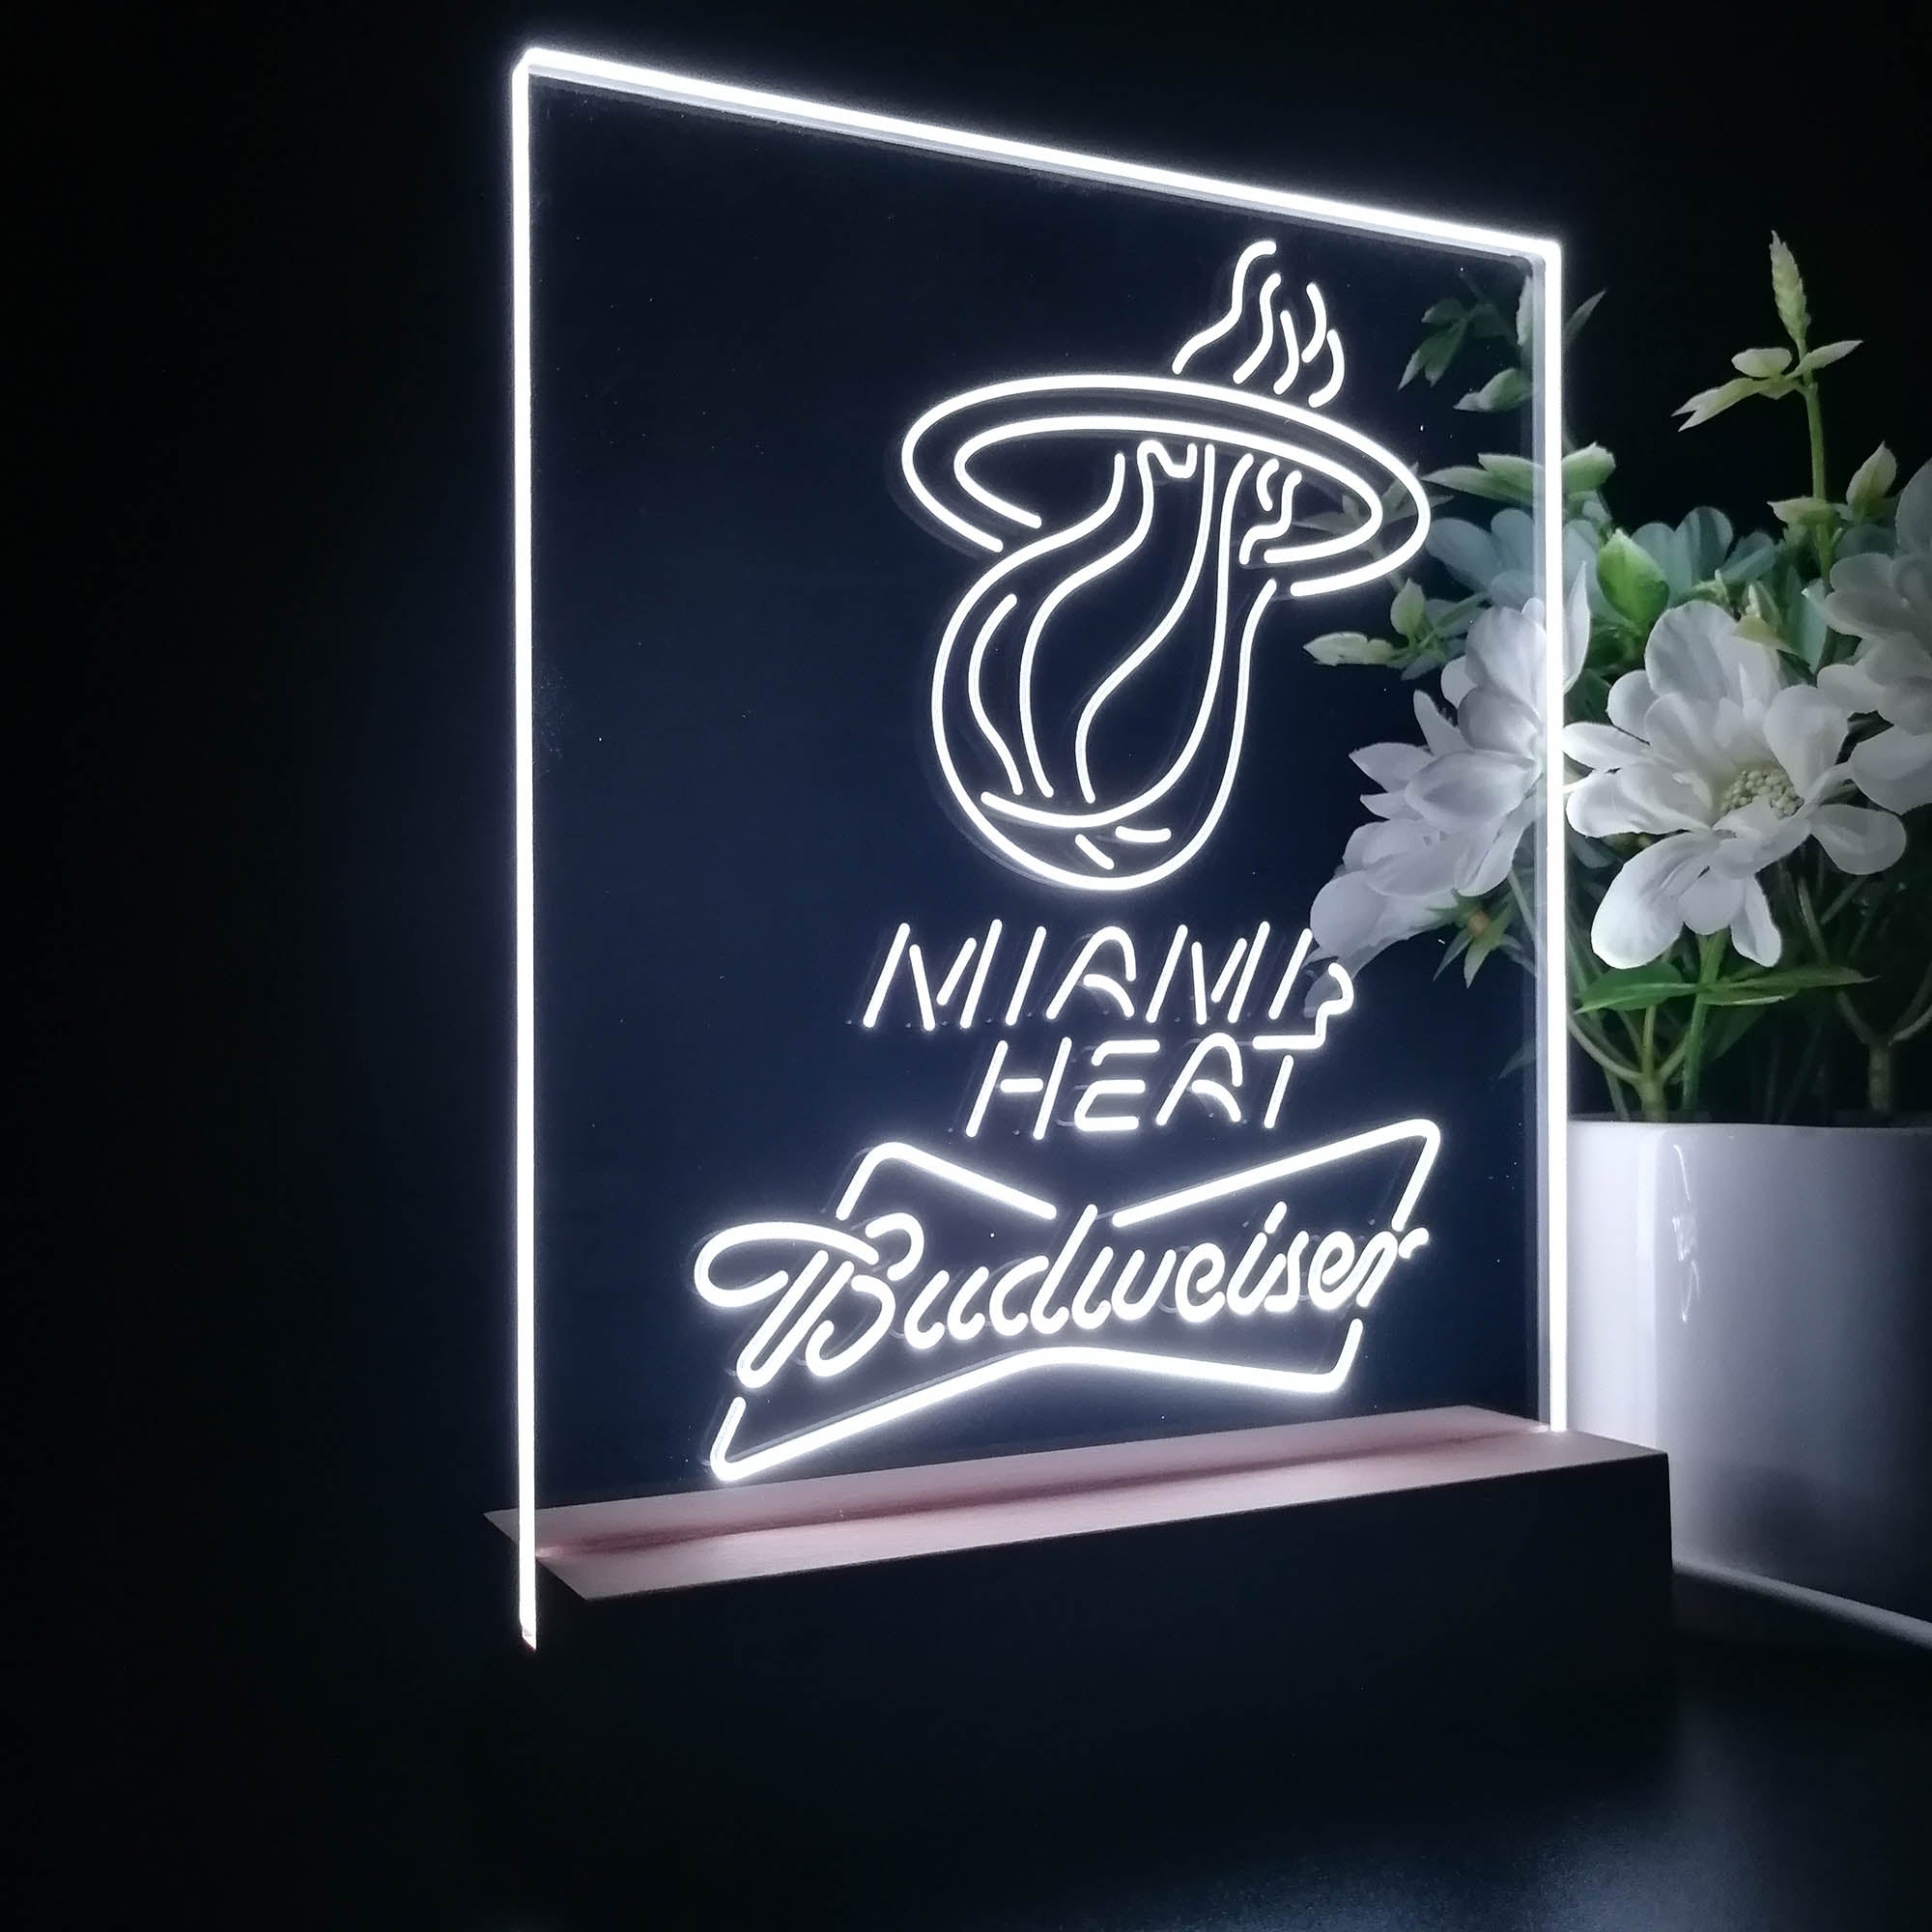 Miami Heat Budweiser 3D LED Optical Illusion Sport Team Night Light